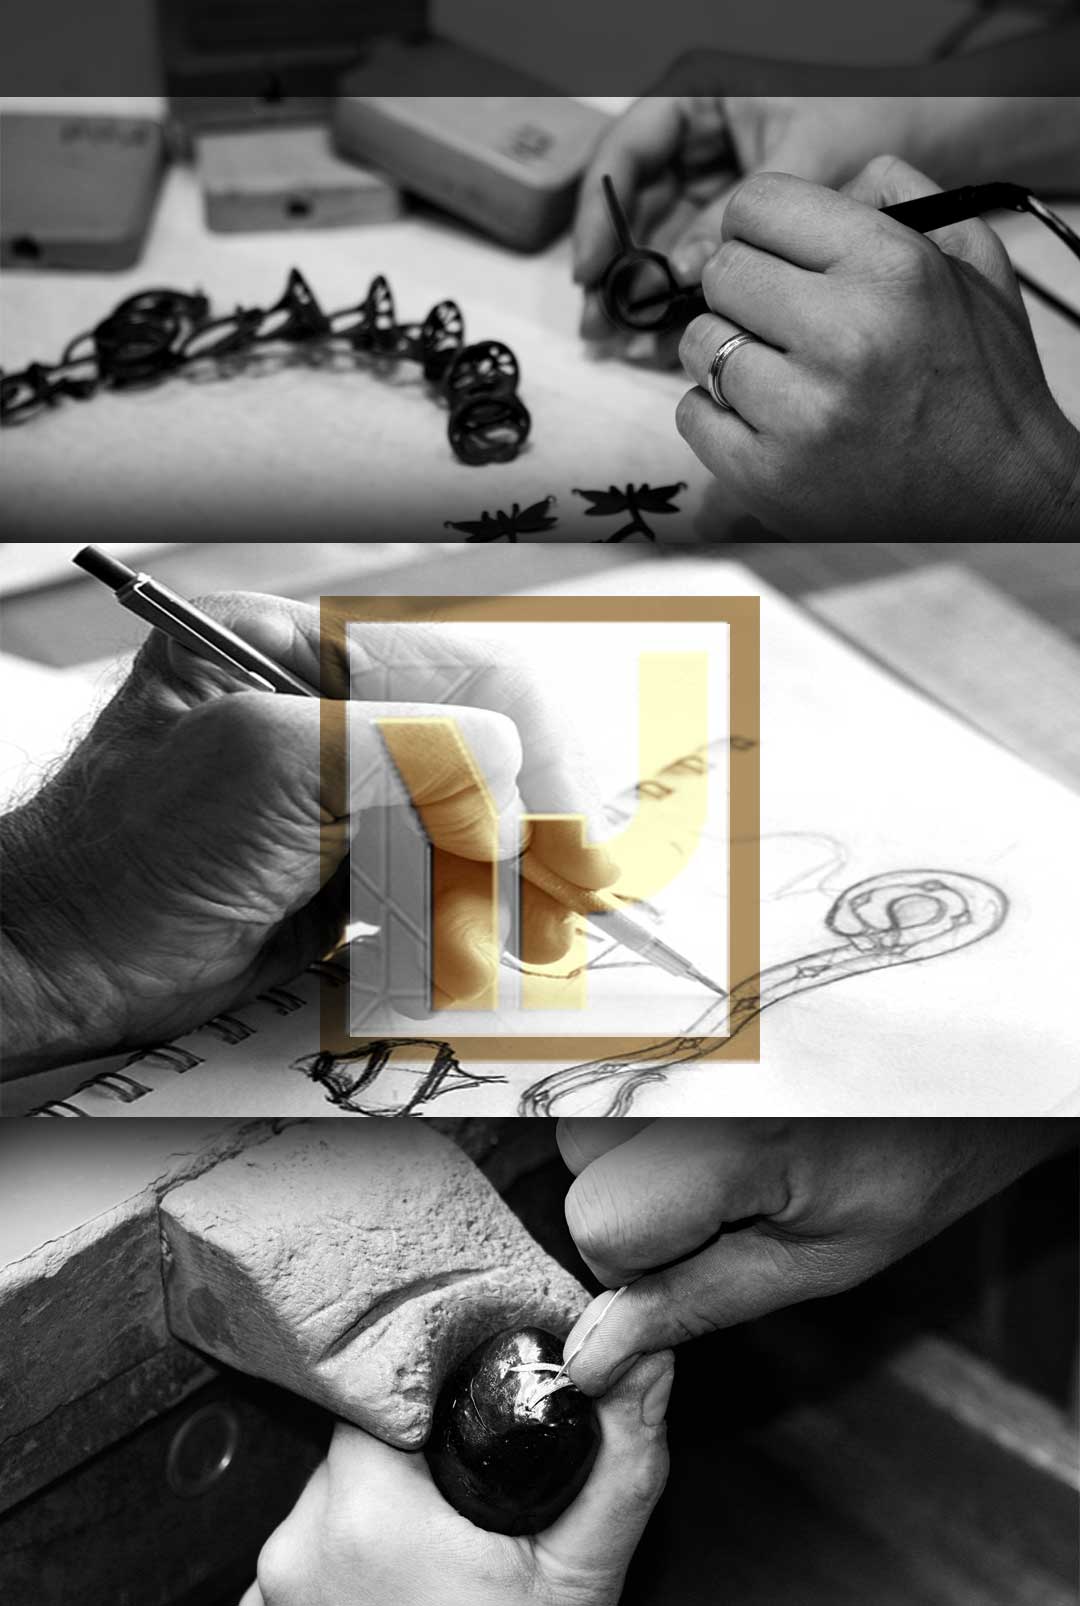 Jewelery Manufacture Workshop - Jewelery design and creation